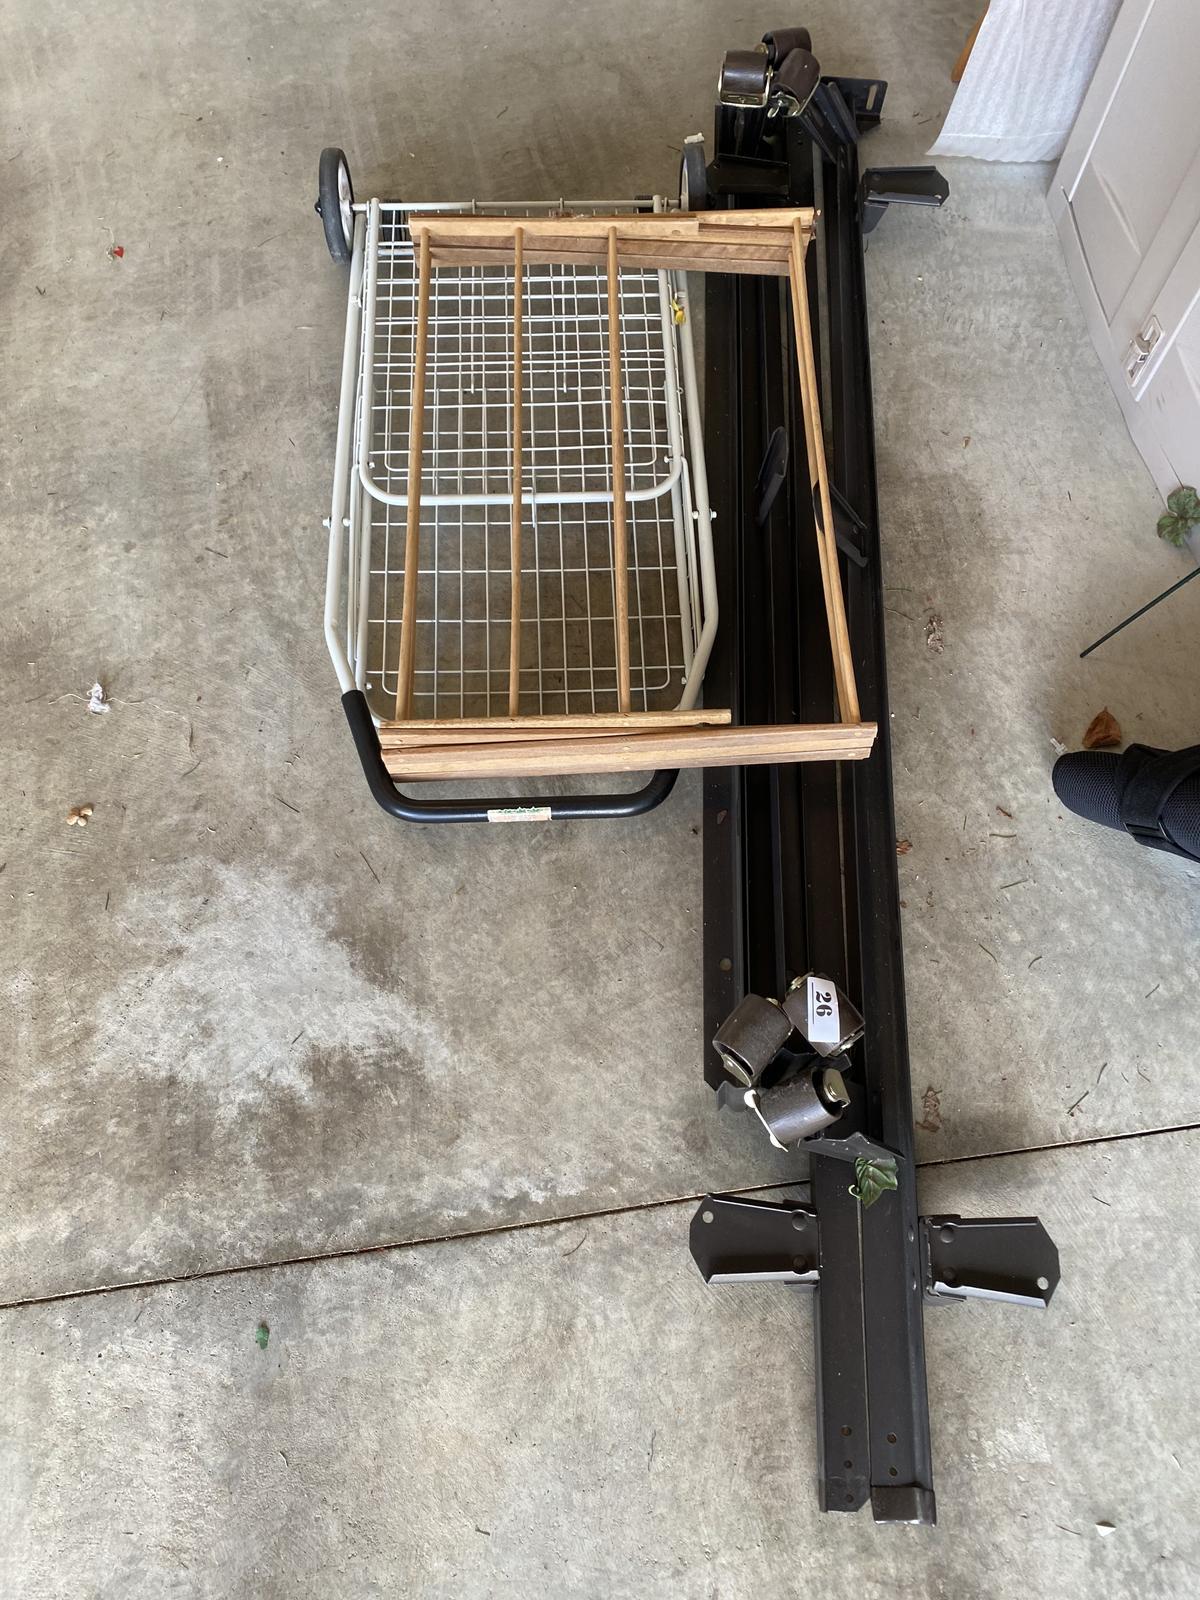 Bed frame, drying rack, wheeled cargo basket